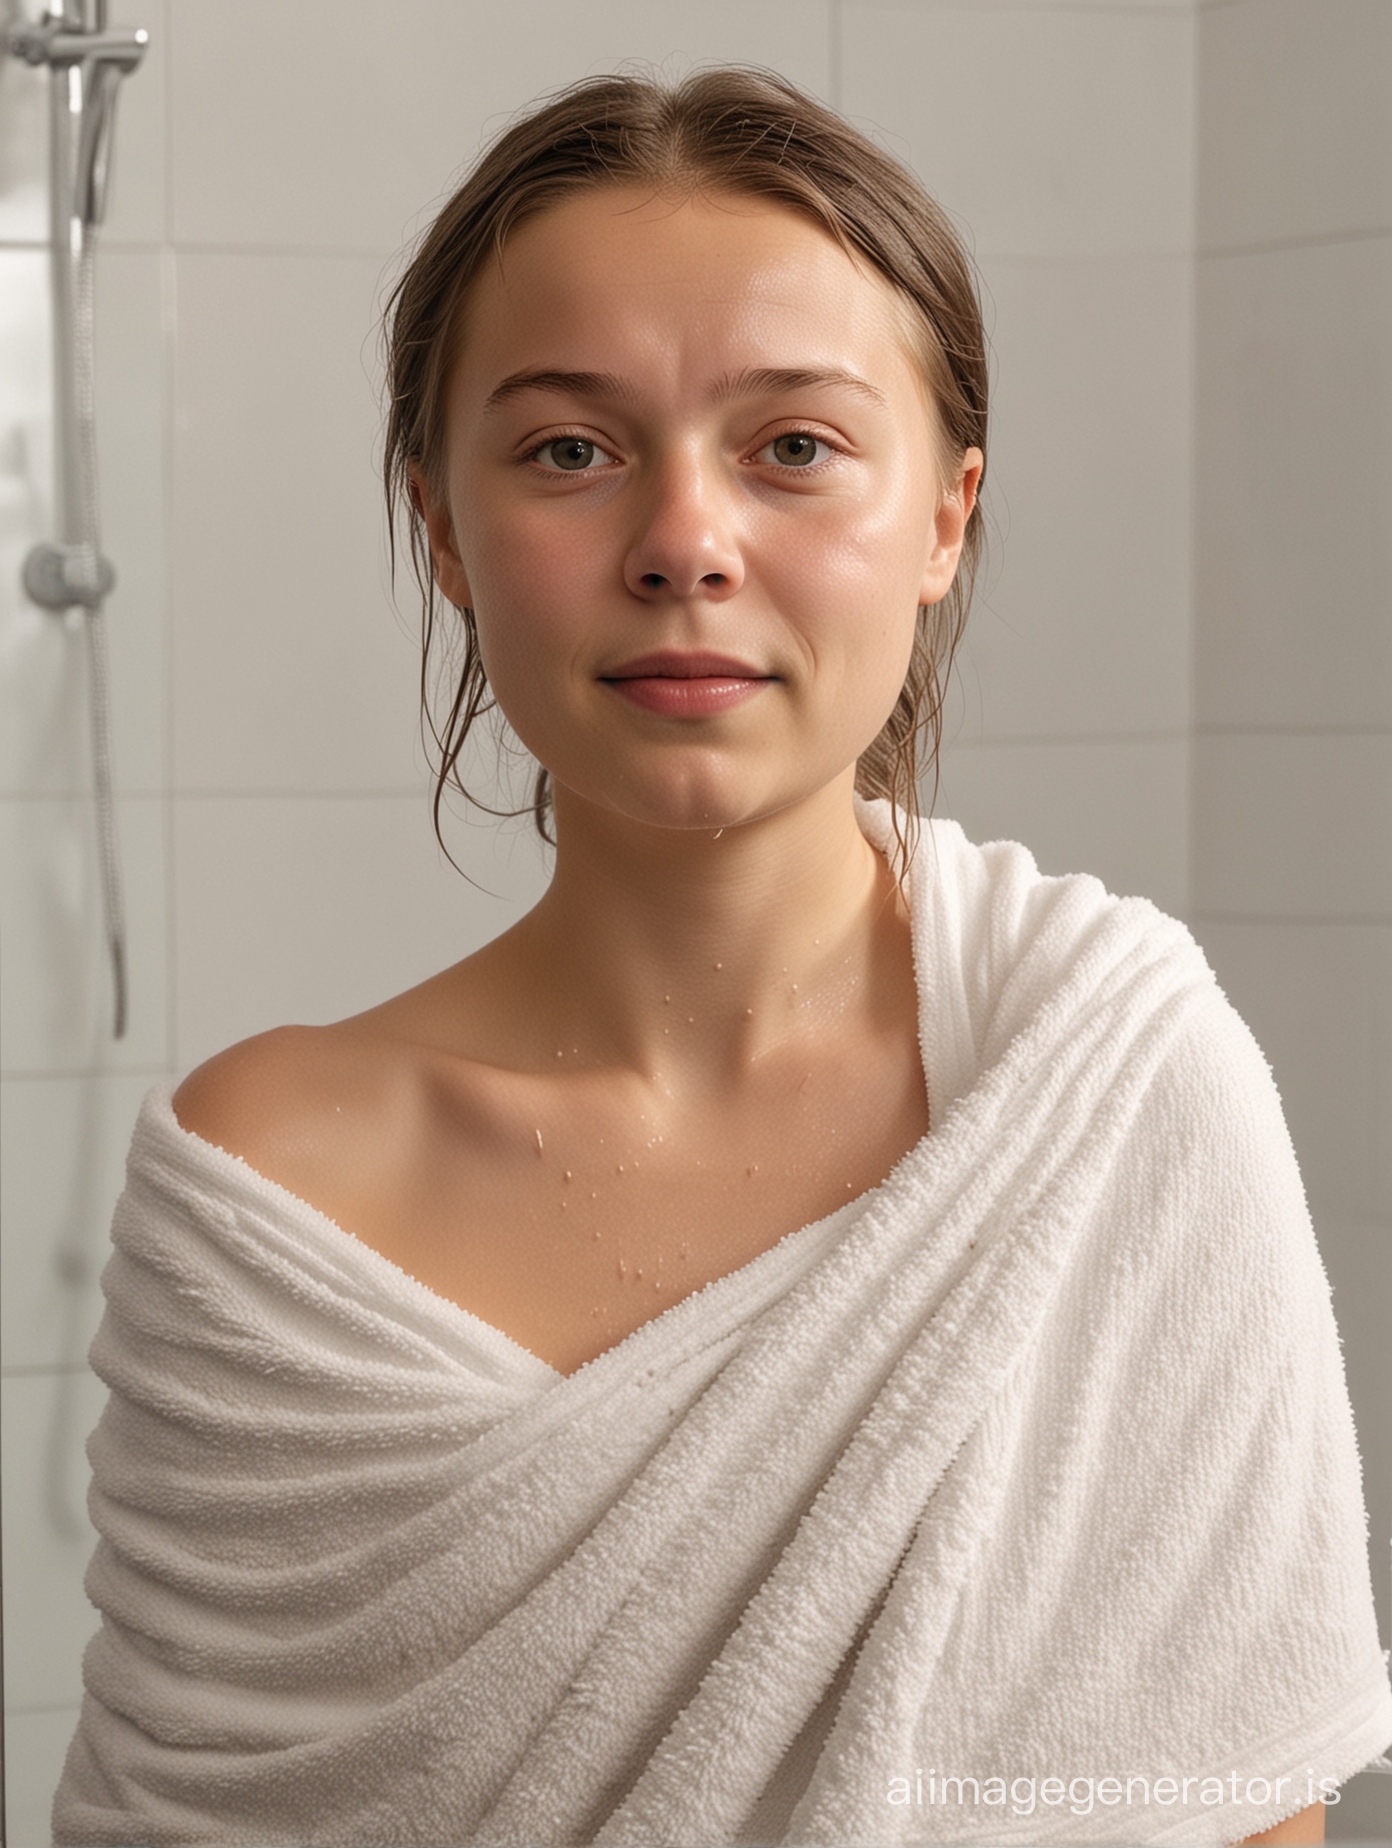 Greta Thunberg in shower, with handtowel full body capture